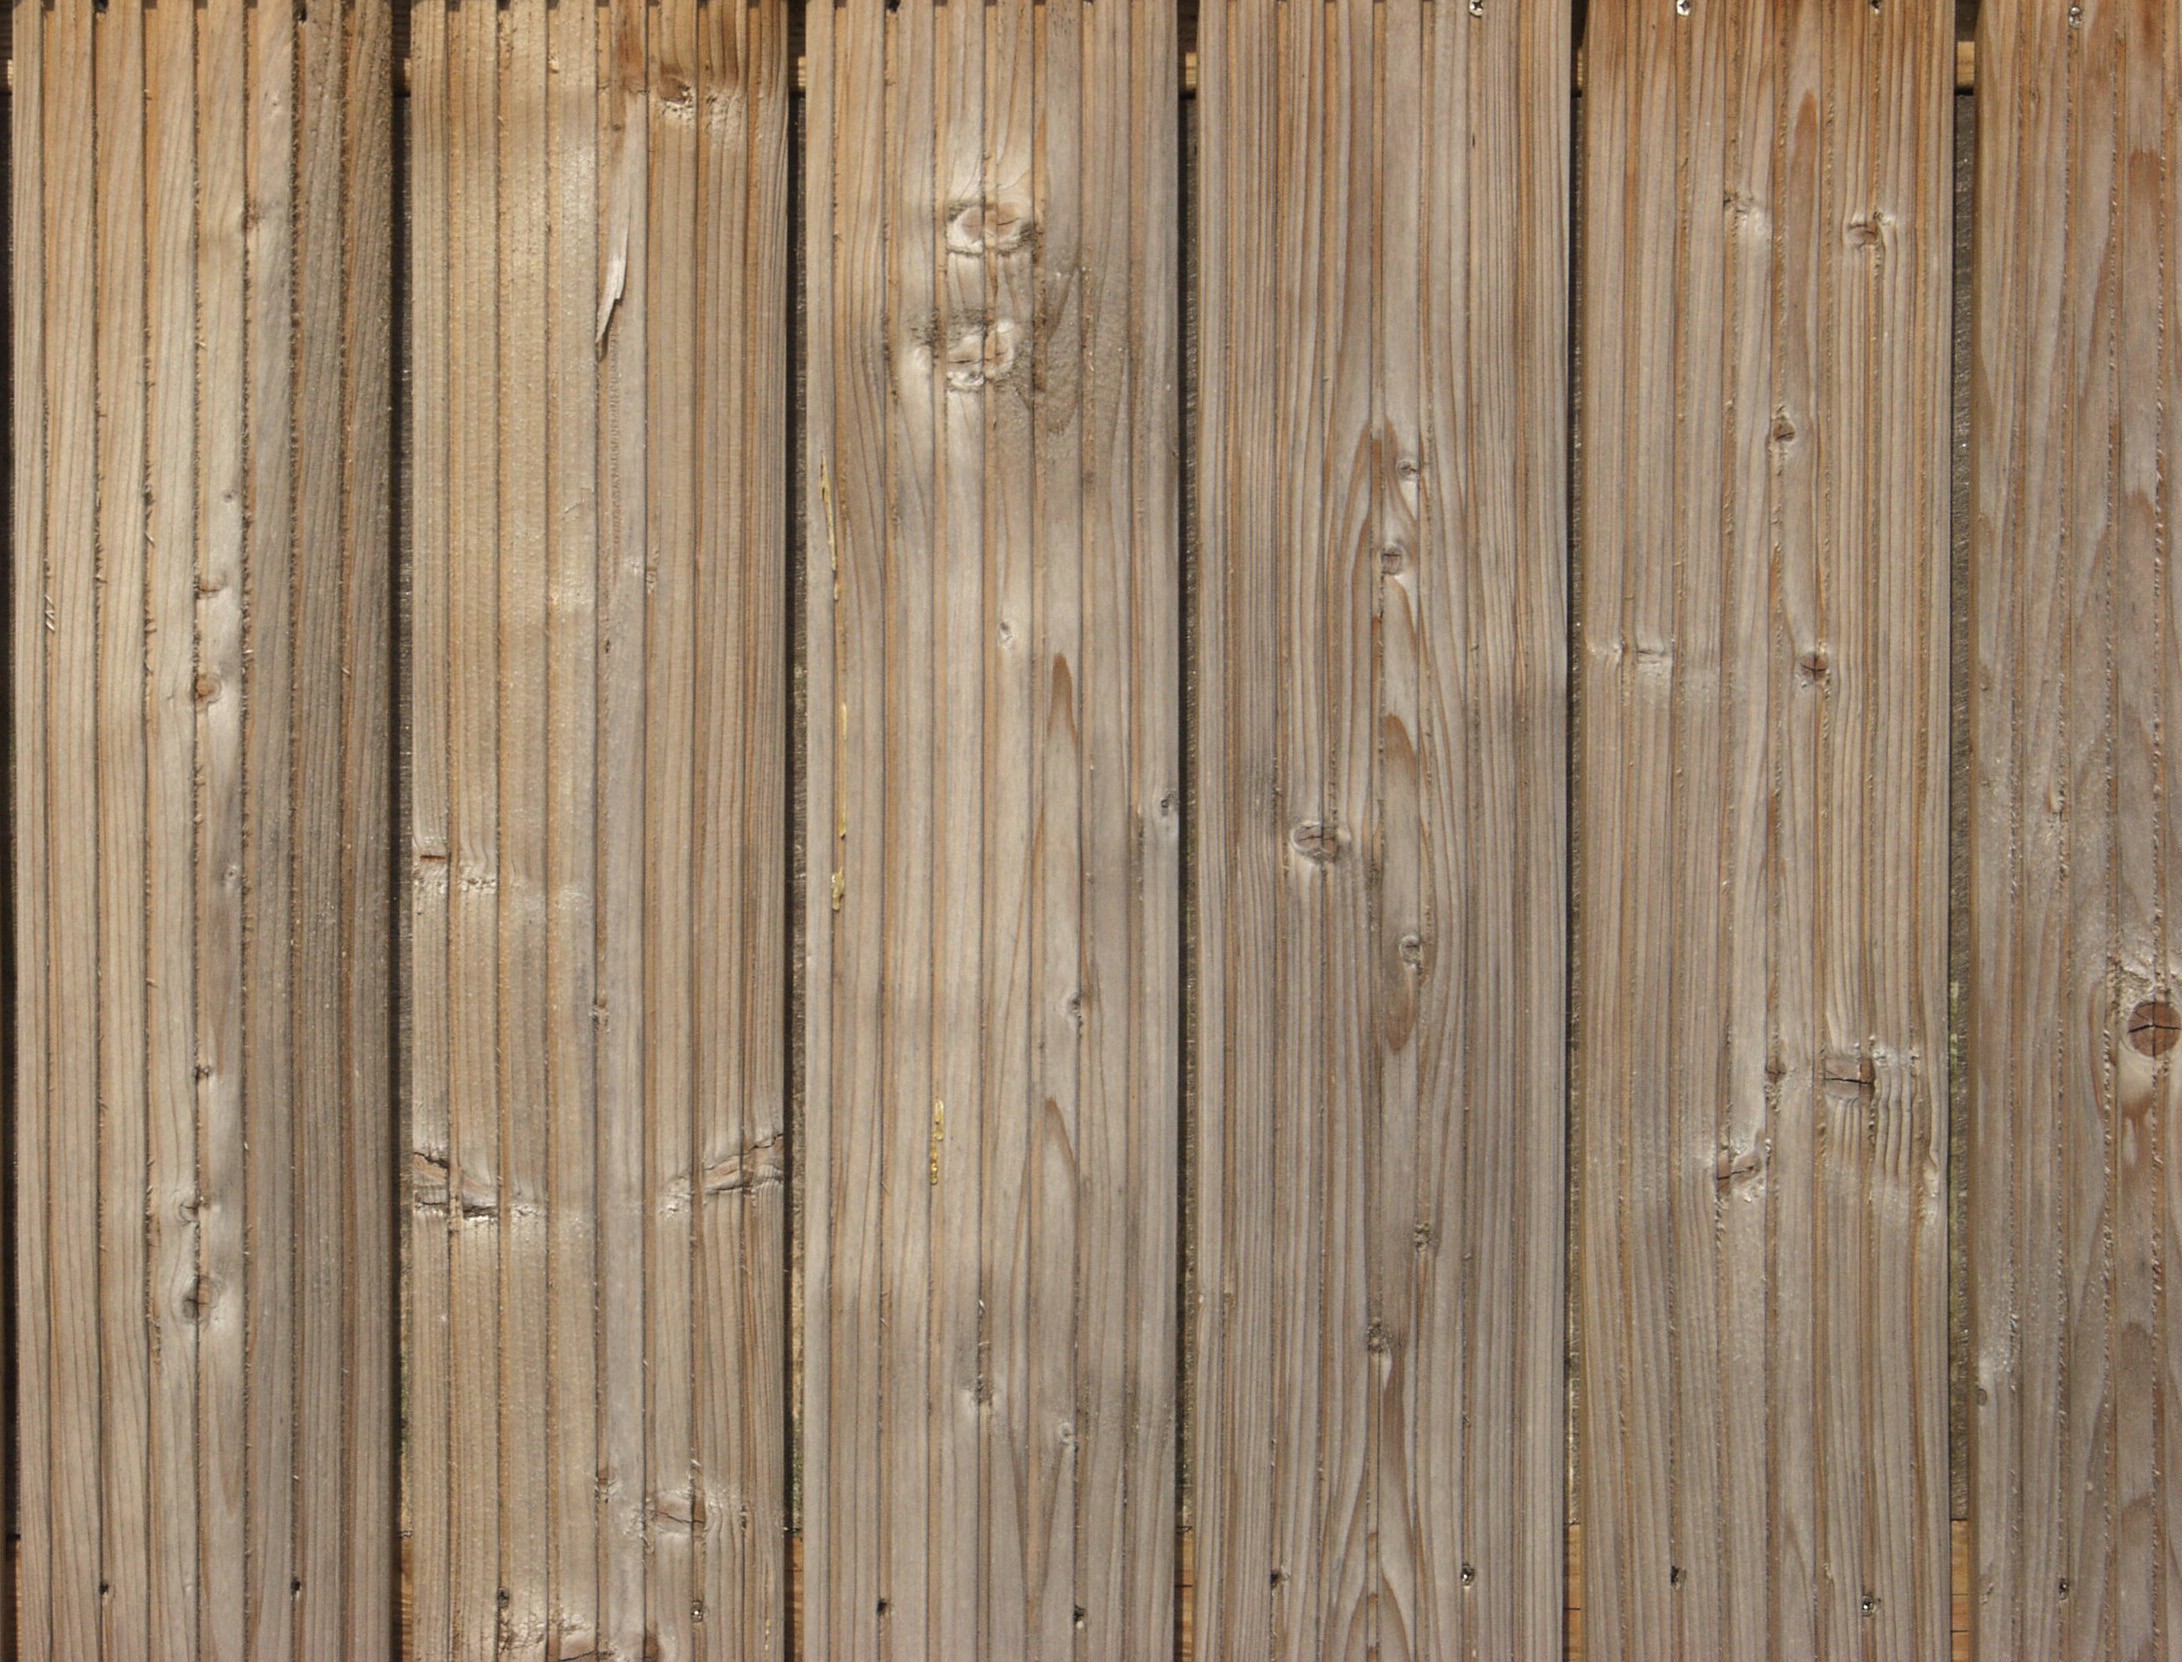 New wooden. Деревянная доска. Бесшовная текстура деревянных досок. Текстура дерева доски бесшовная. Деревянный настил текстура.